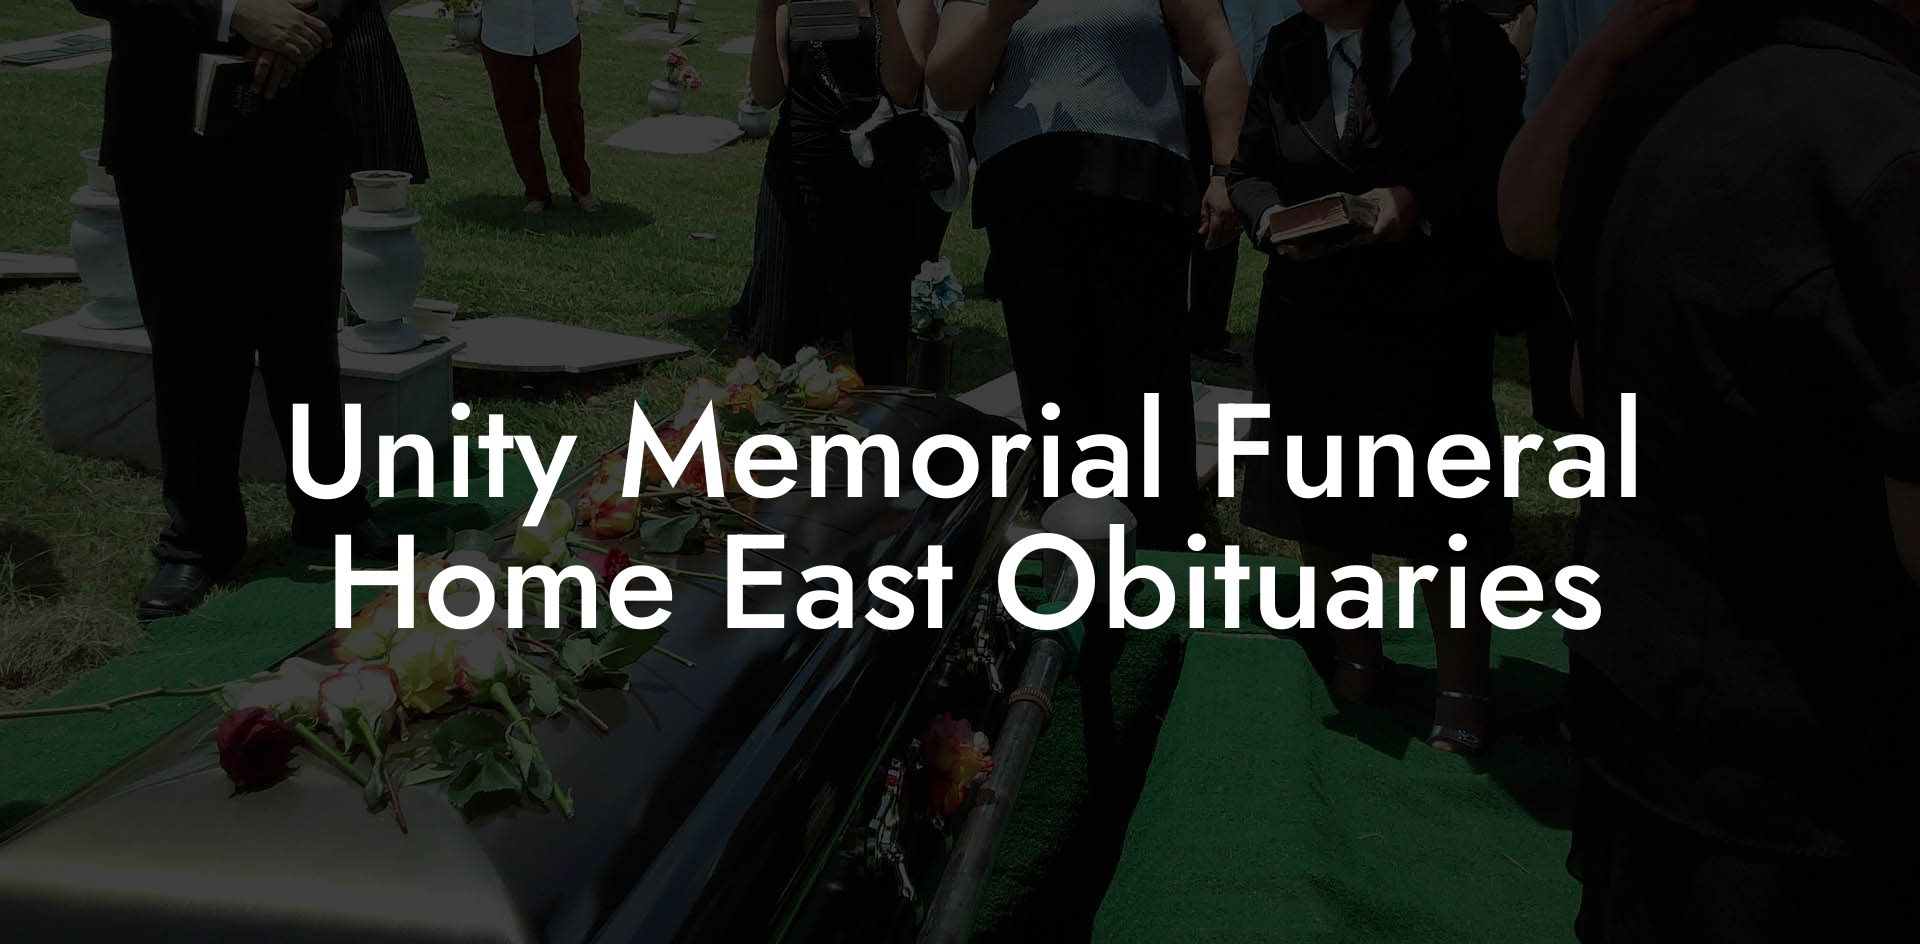 Unity Memorial Funeral Home East Obituaries